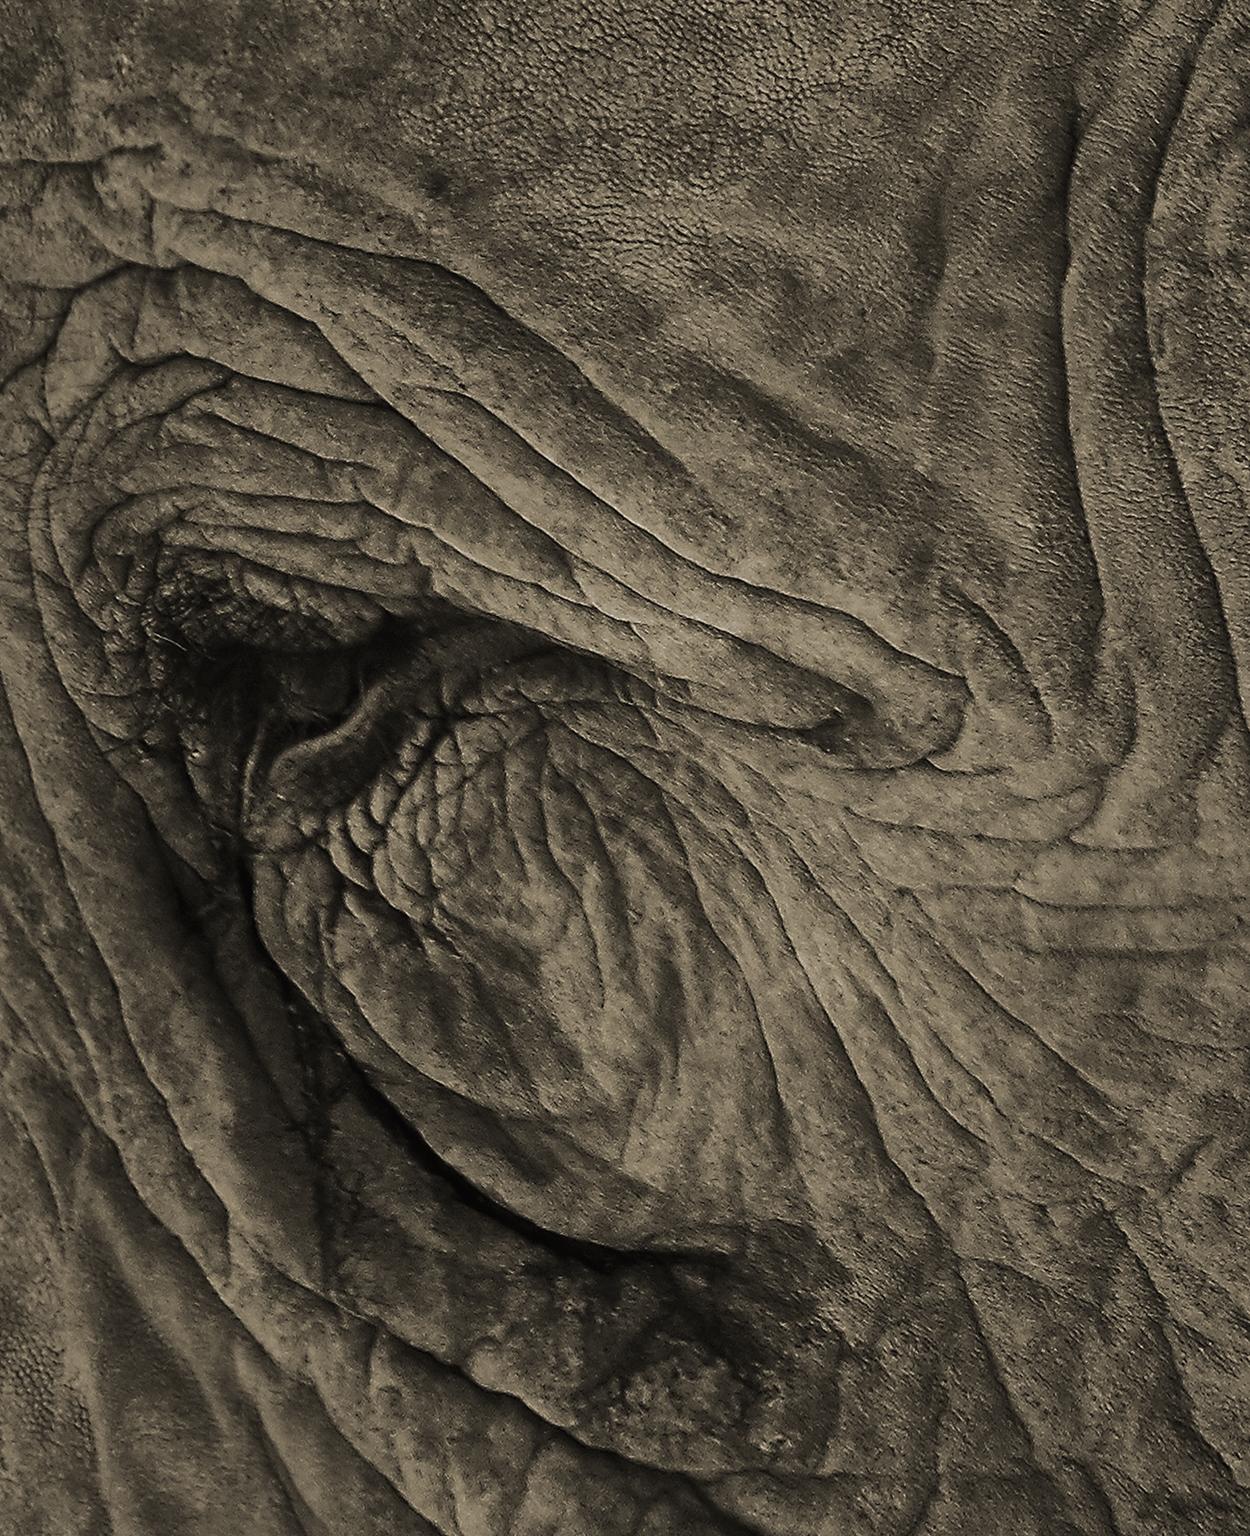 Elephant No. 3 - Photograph by Chris Gordaneer